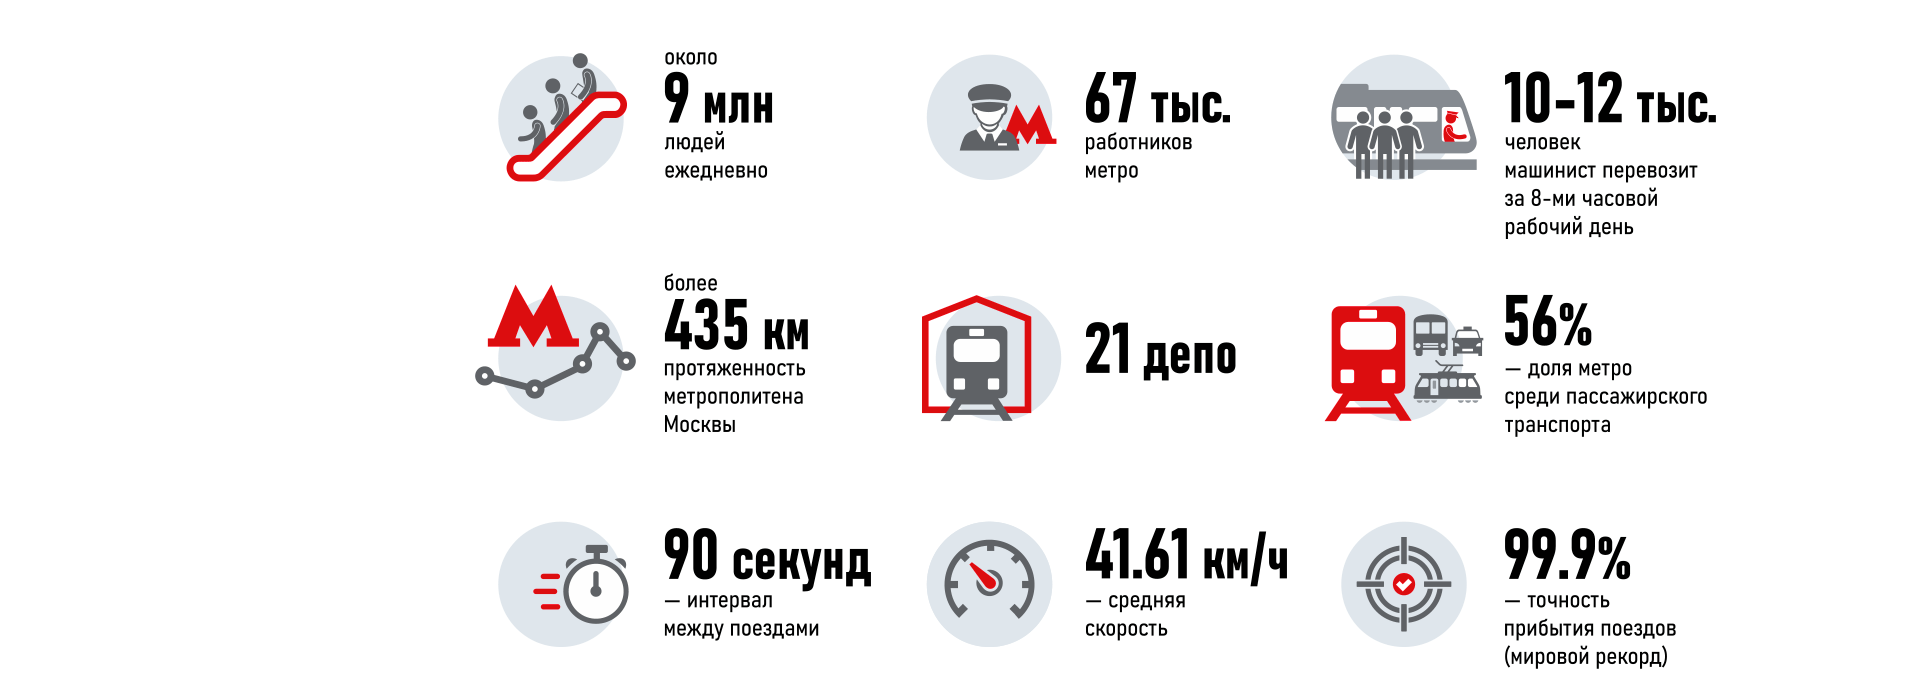 Metro info ru